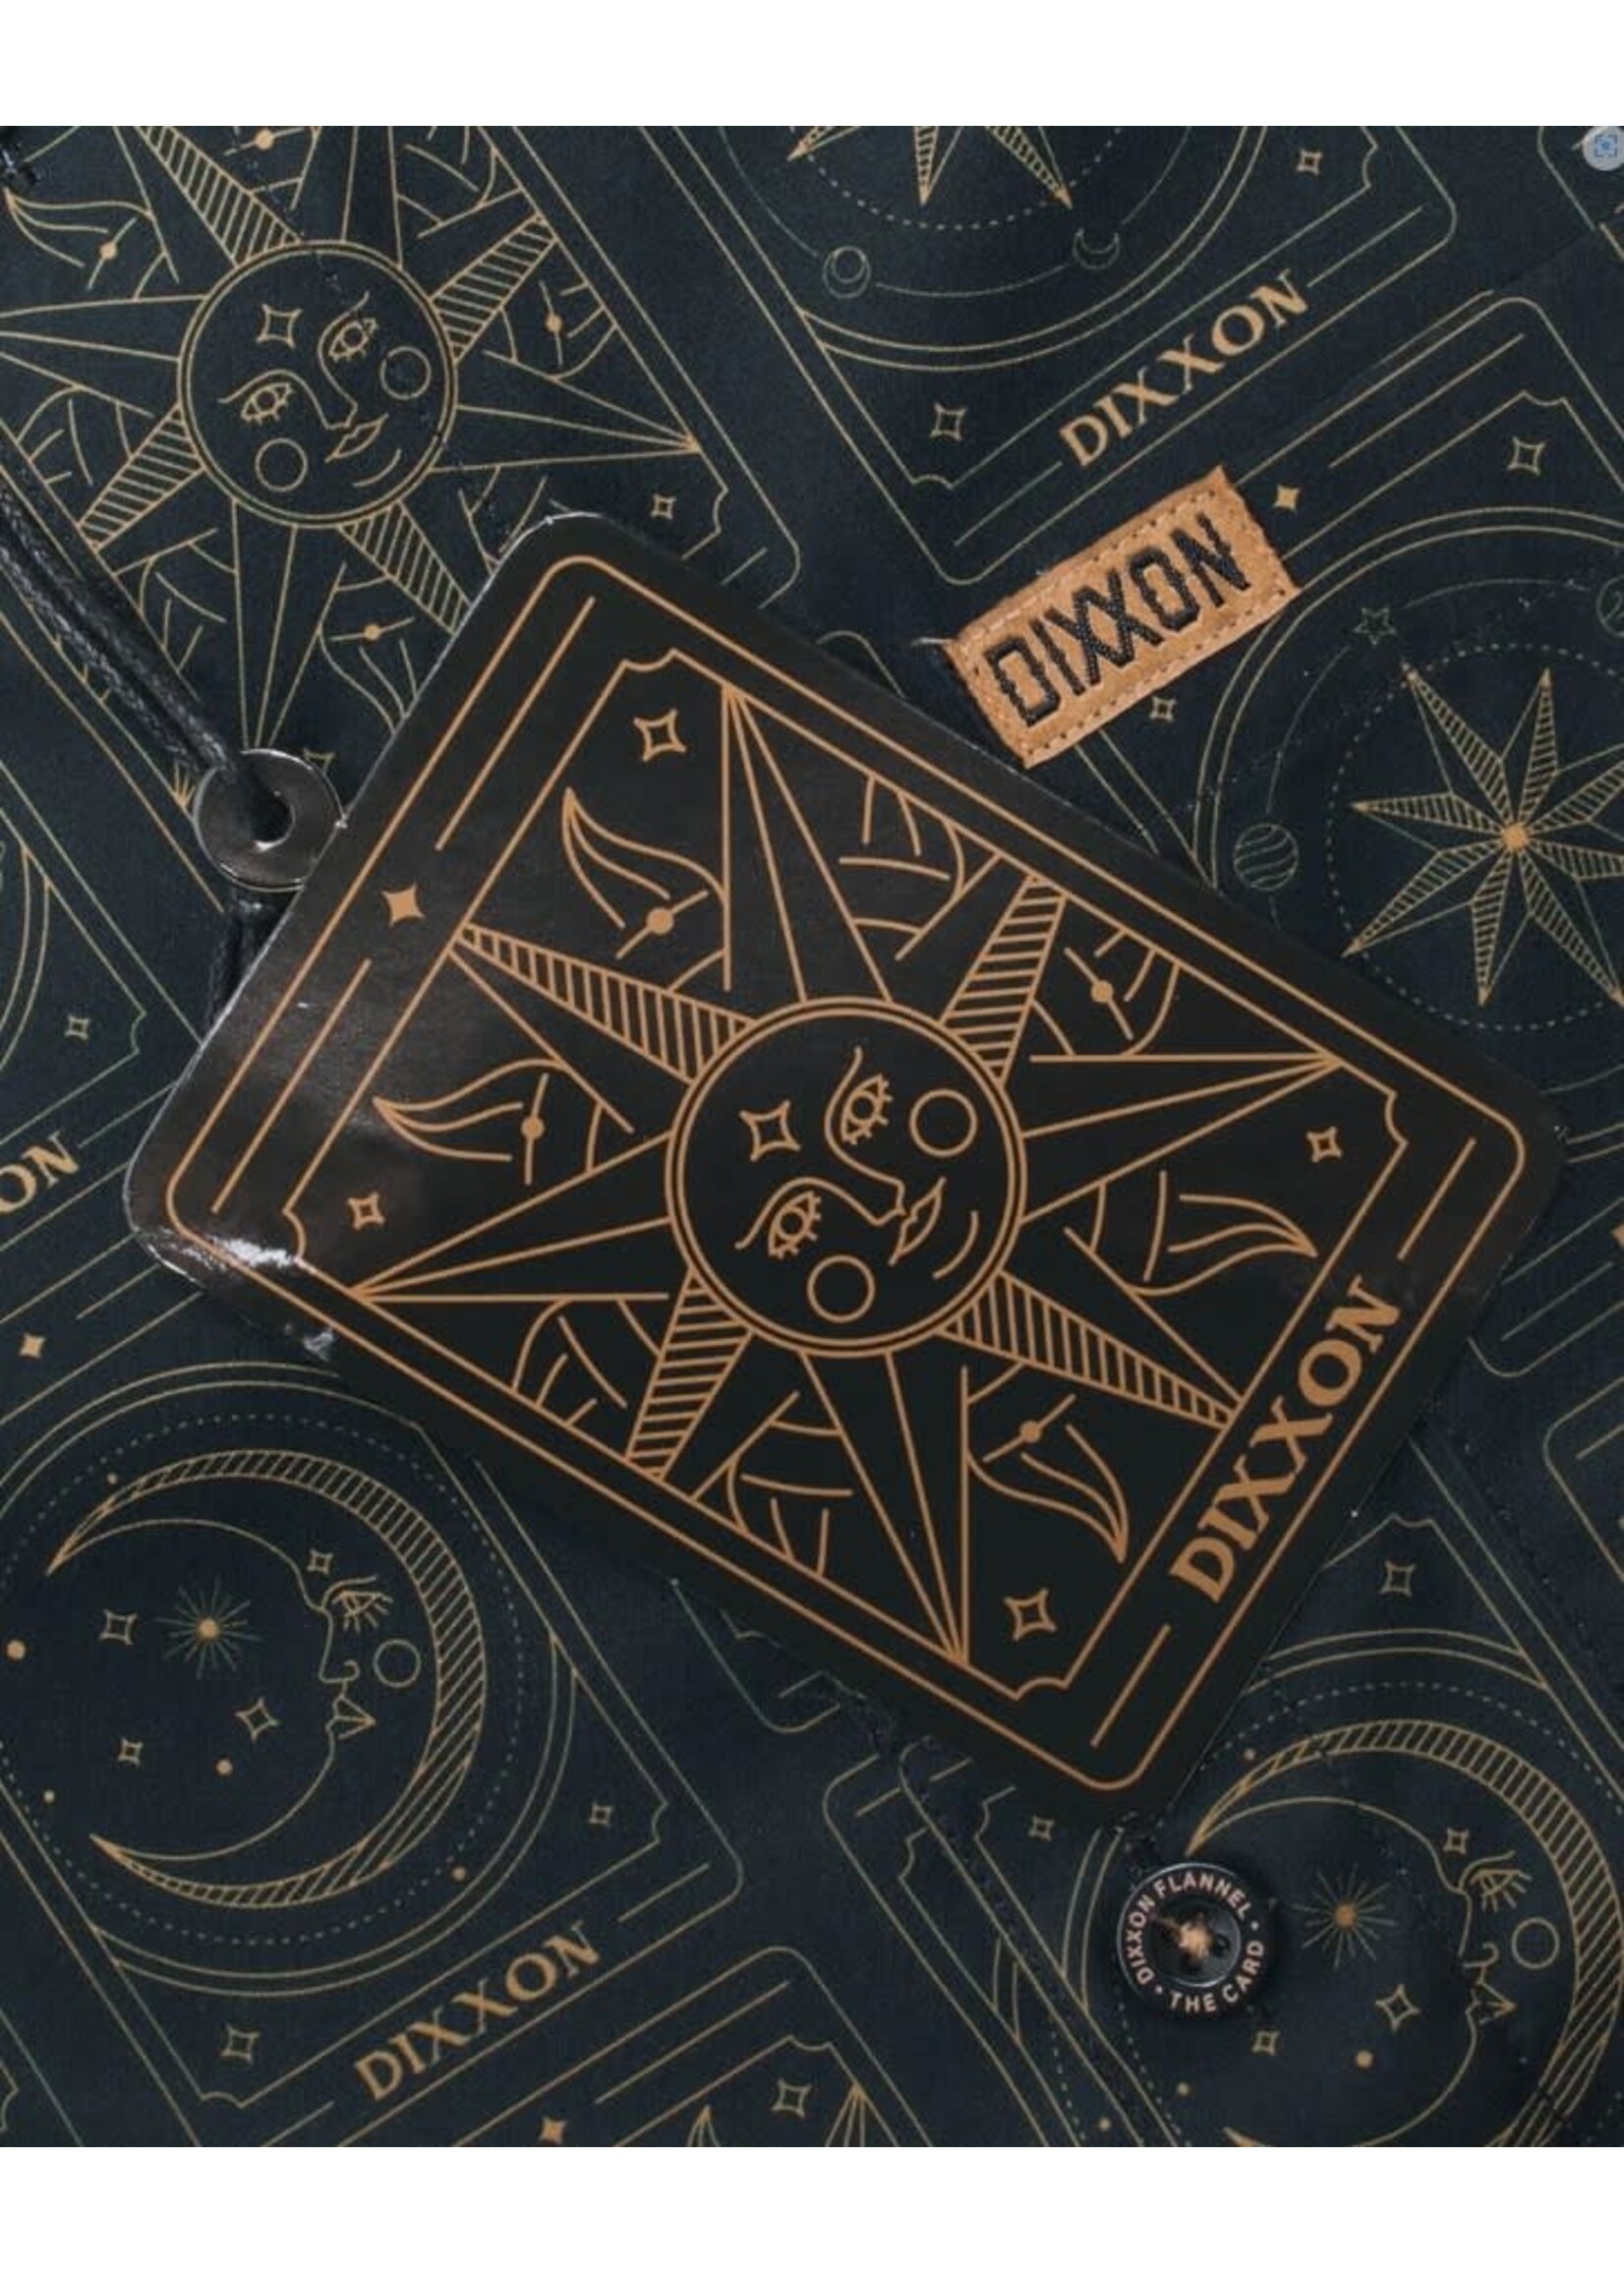 Dixxon Dixxon The Card Party Shirt